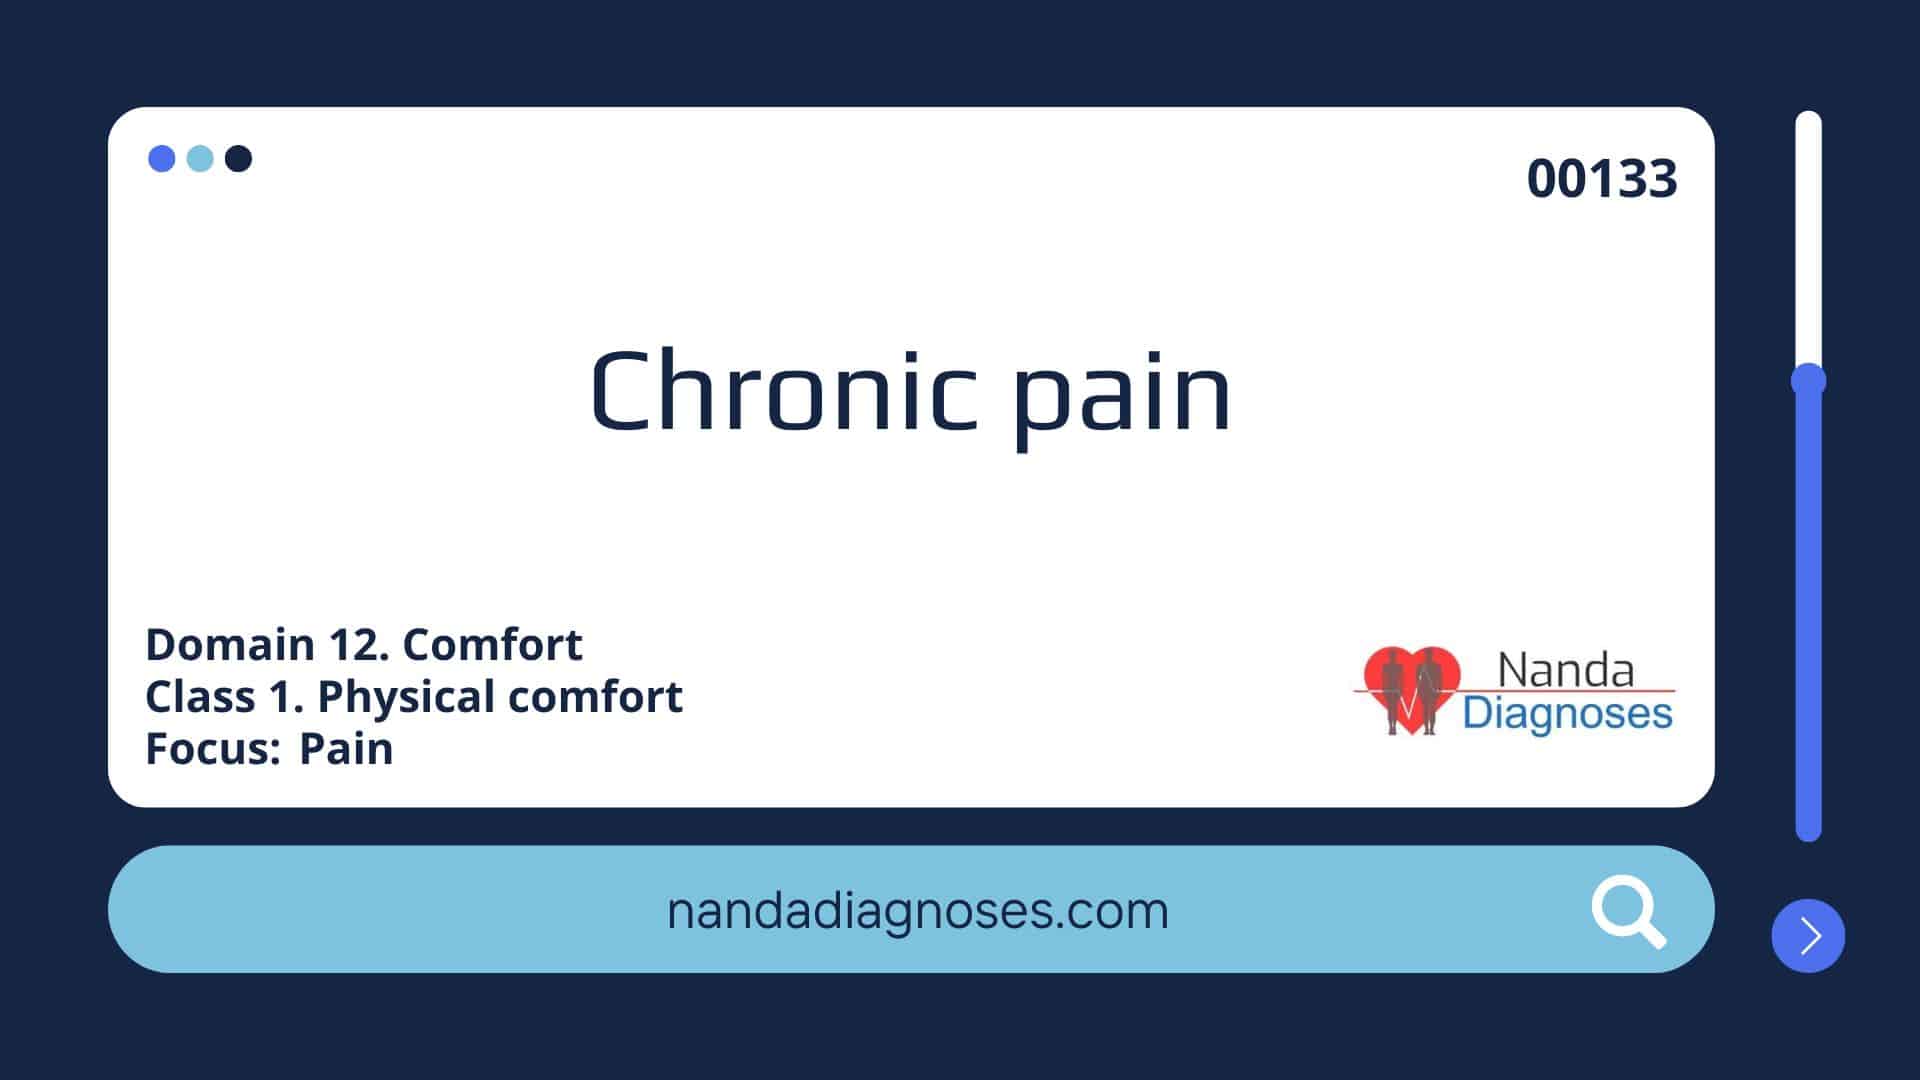 Nursing diagnosis Chronic pain